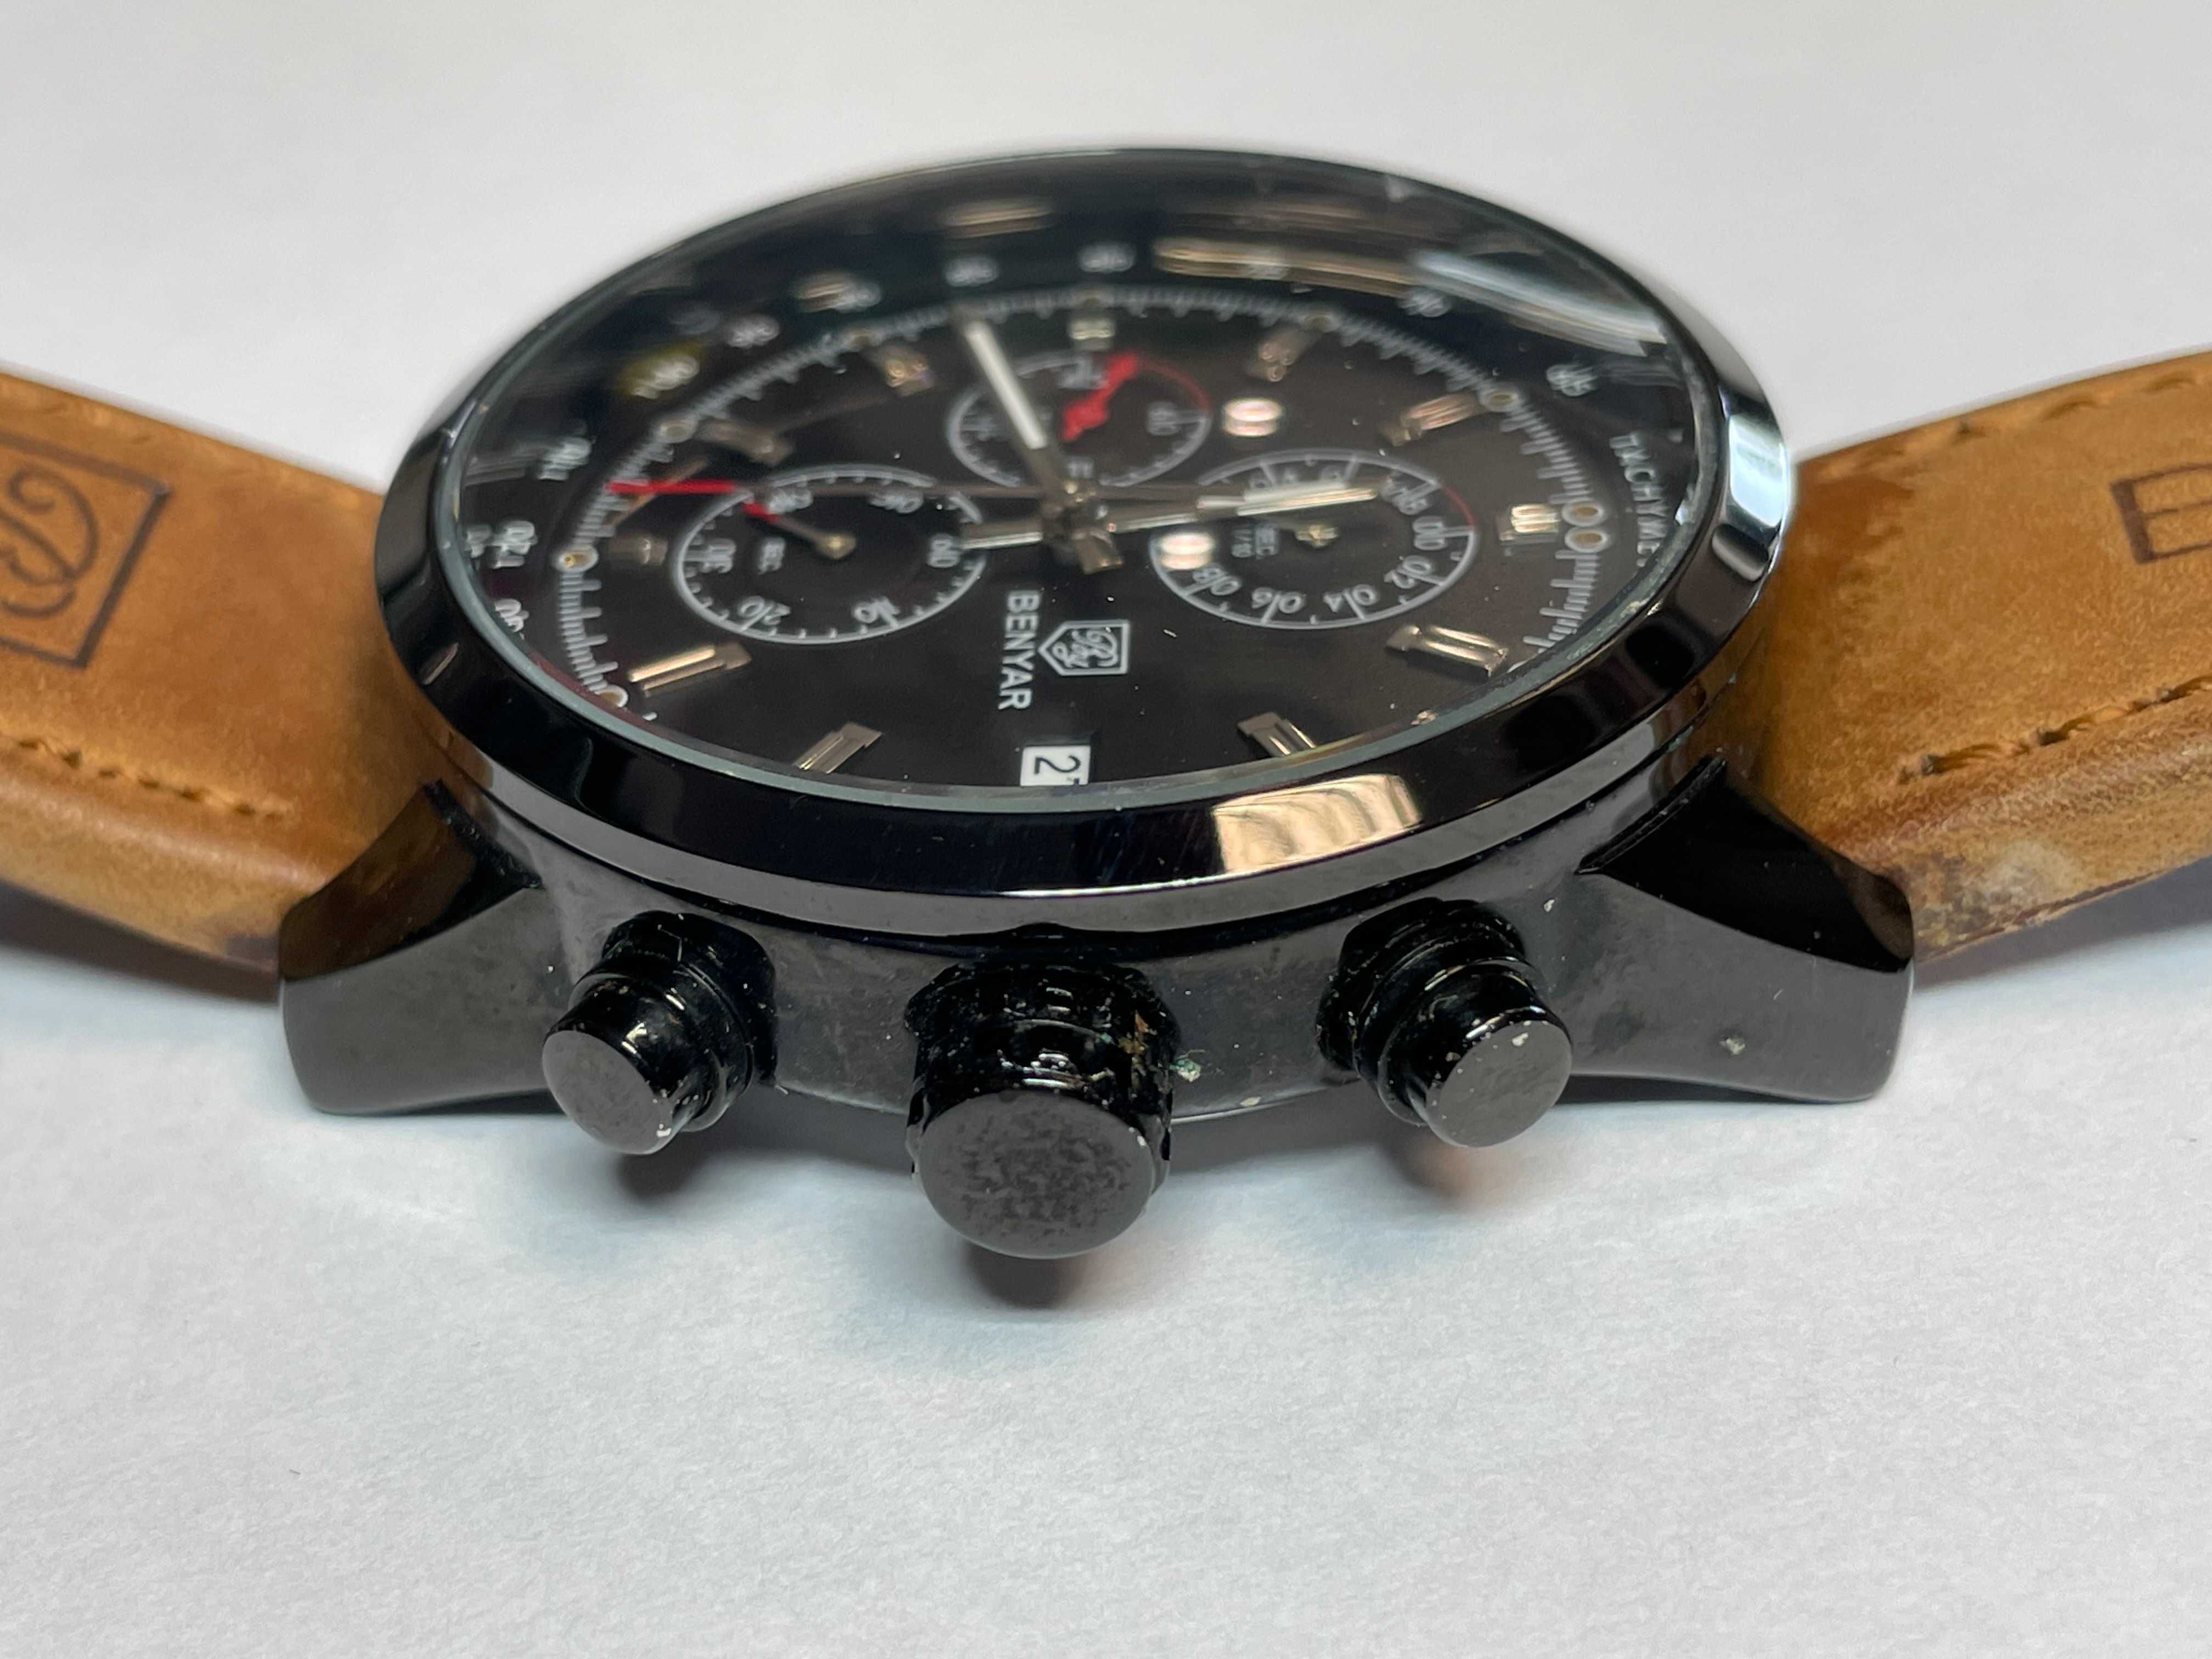 Klasyczny, męski zegarek BENYAR BY-5102M pasek datownik chronograf